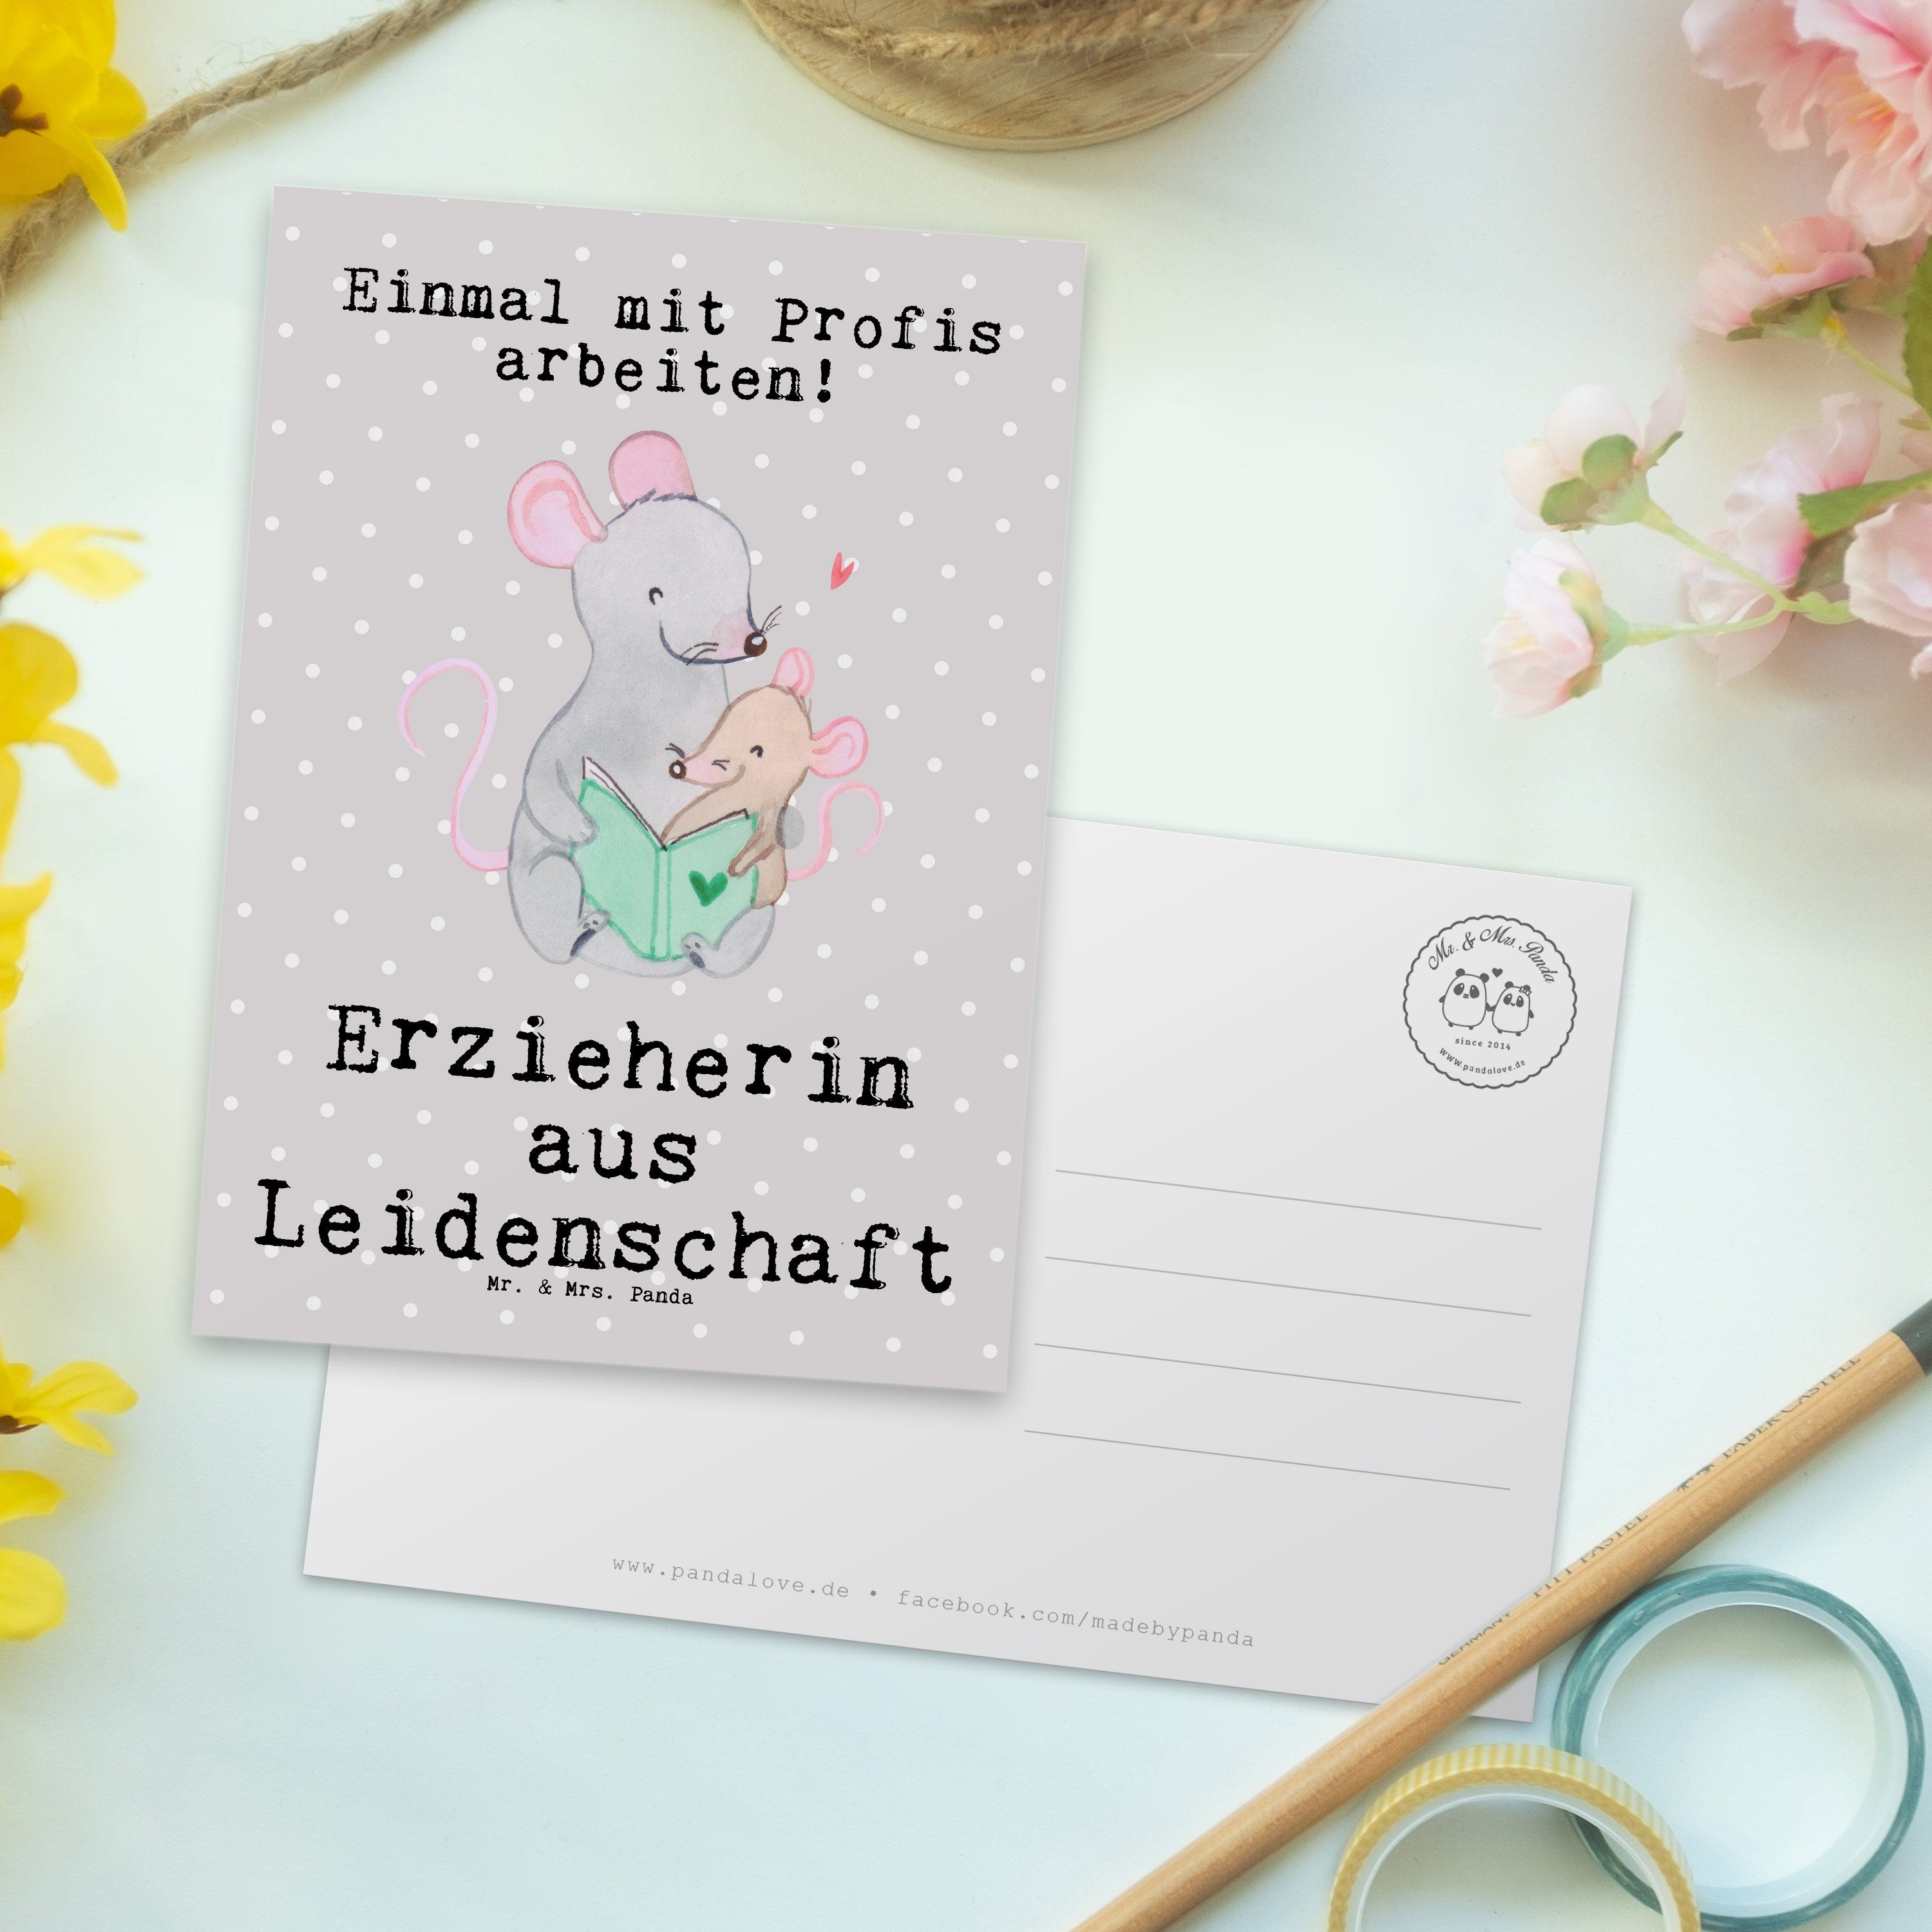 Mr. & Mrs. Erzieherin Leidenschaft Grau Geburtst aus Buch, - - Geschenk, Postkarte Pastell Panda